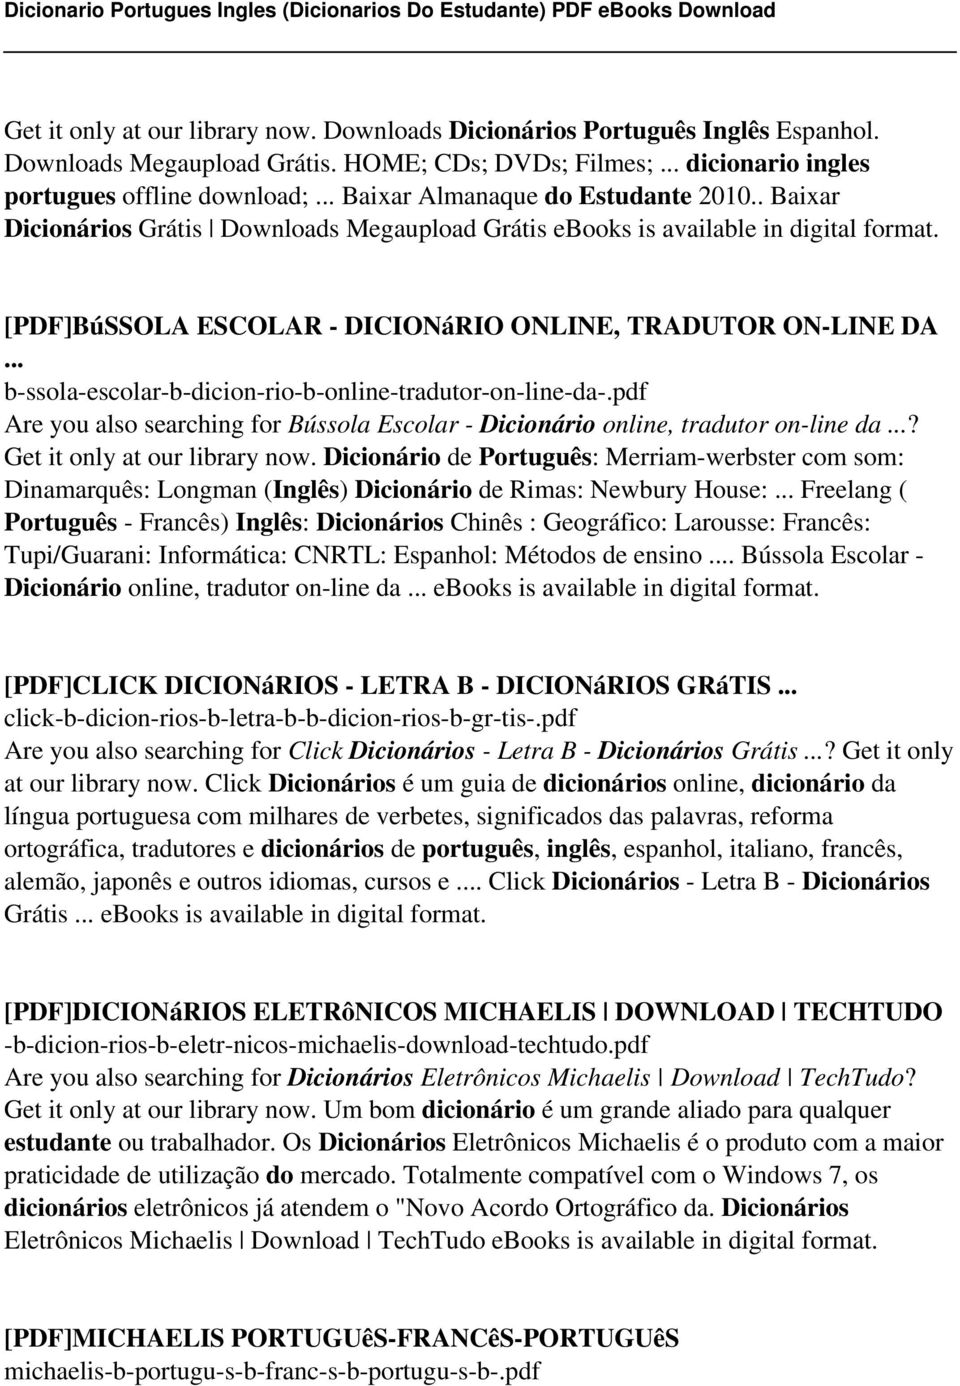 Ingles michaelis dicionario pdf portugues